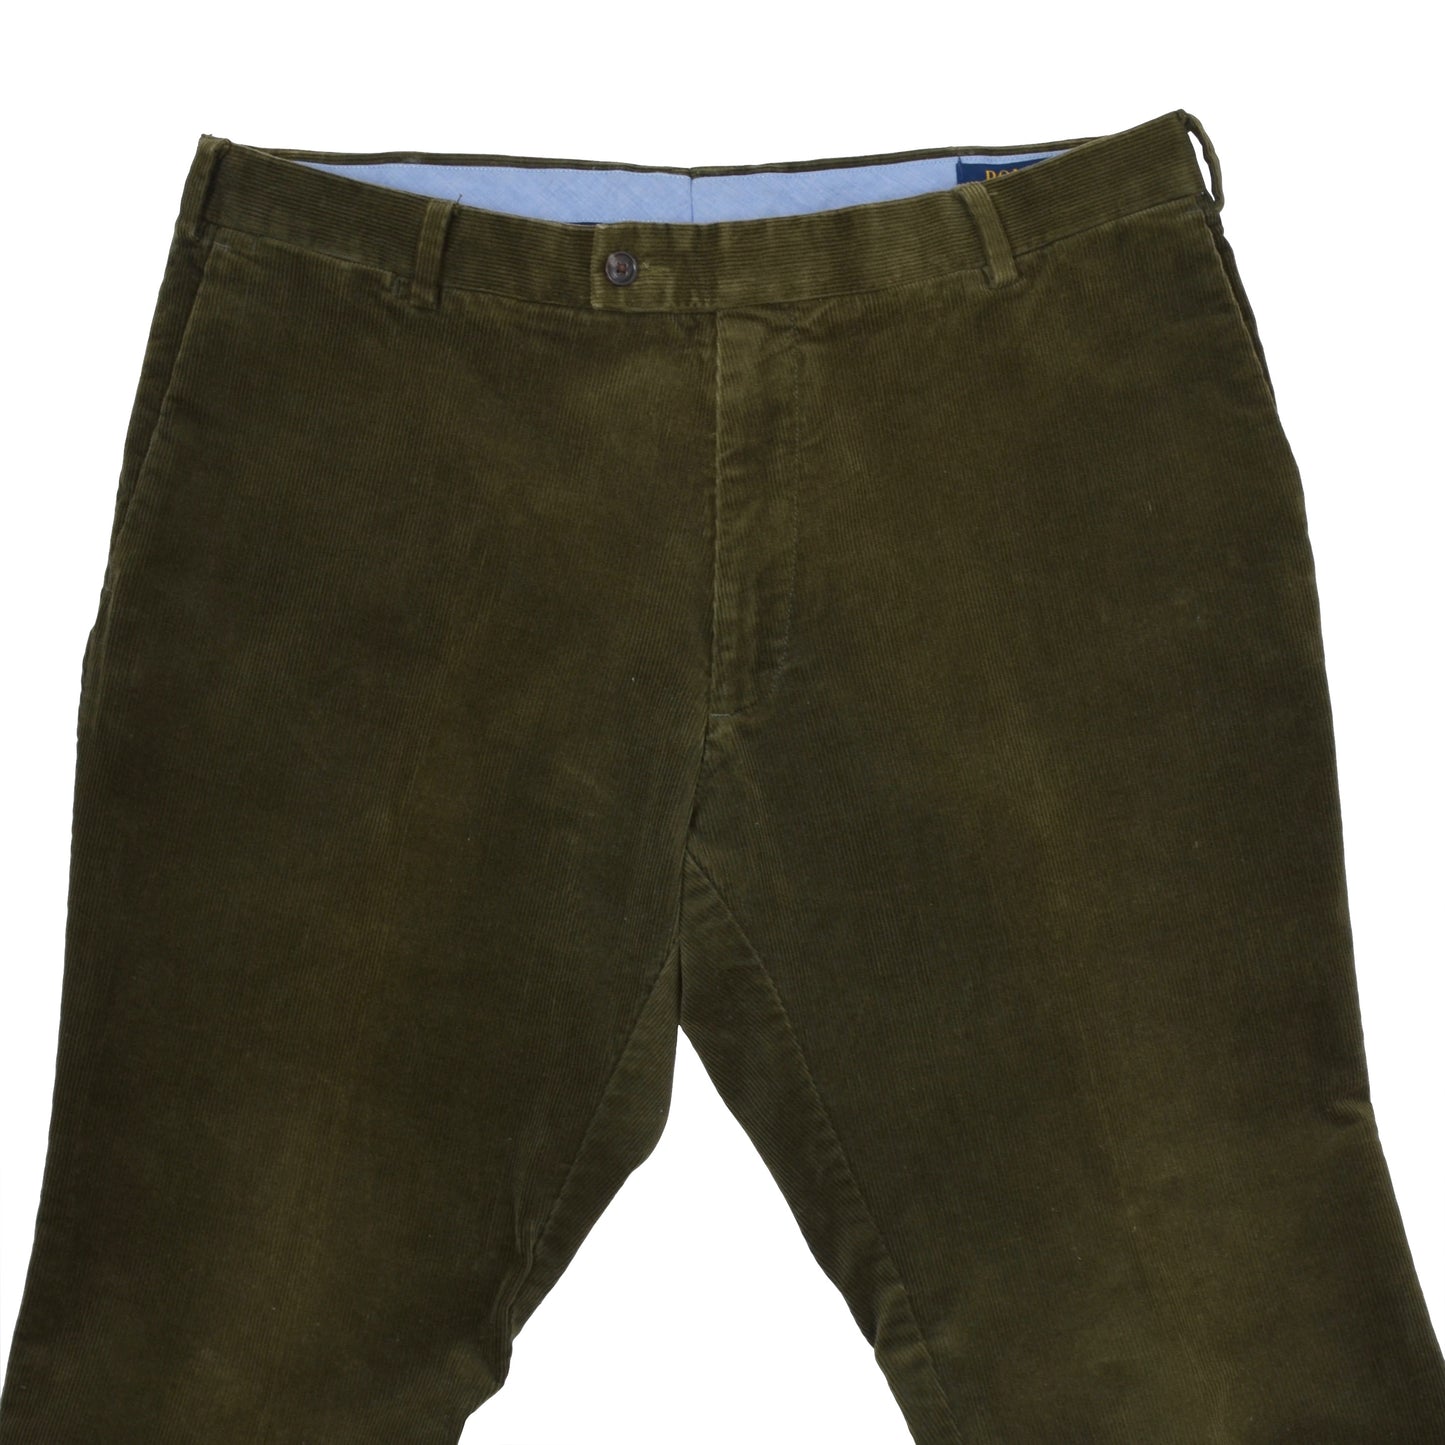 Polo Ralph Lauren Corduroy Pants Size 38/34 Slim Fit - Moss Green